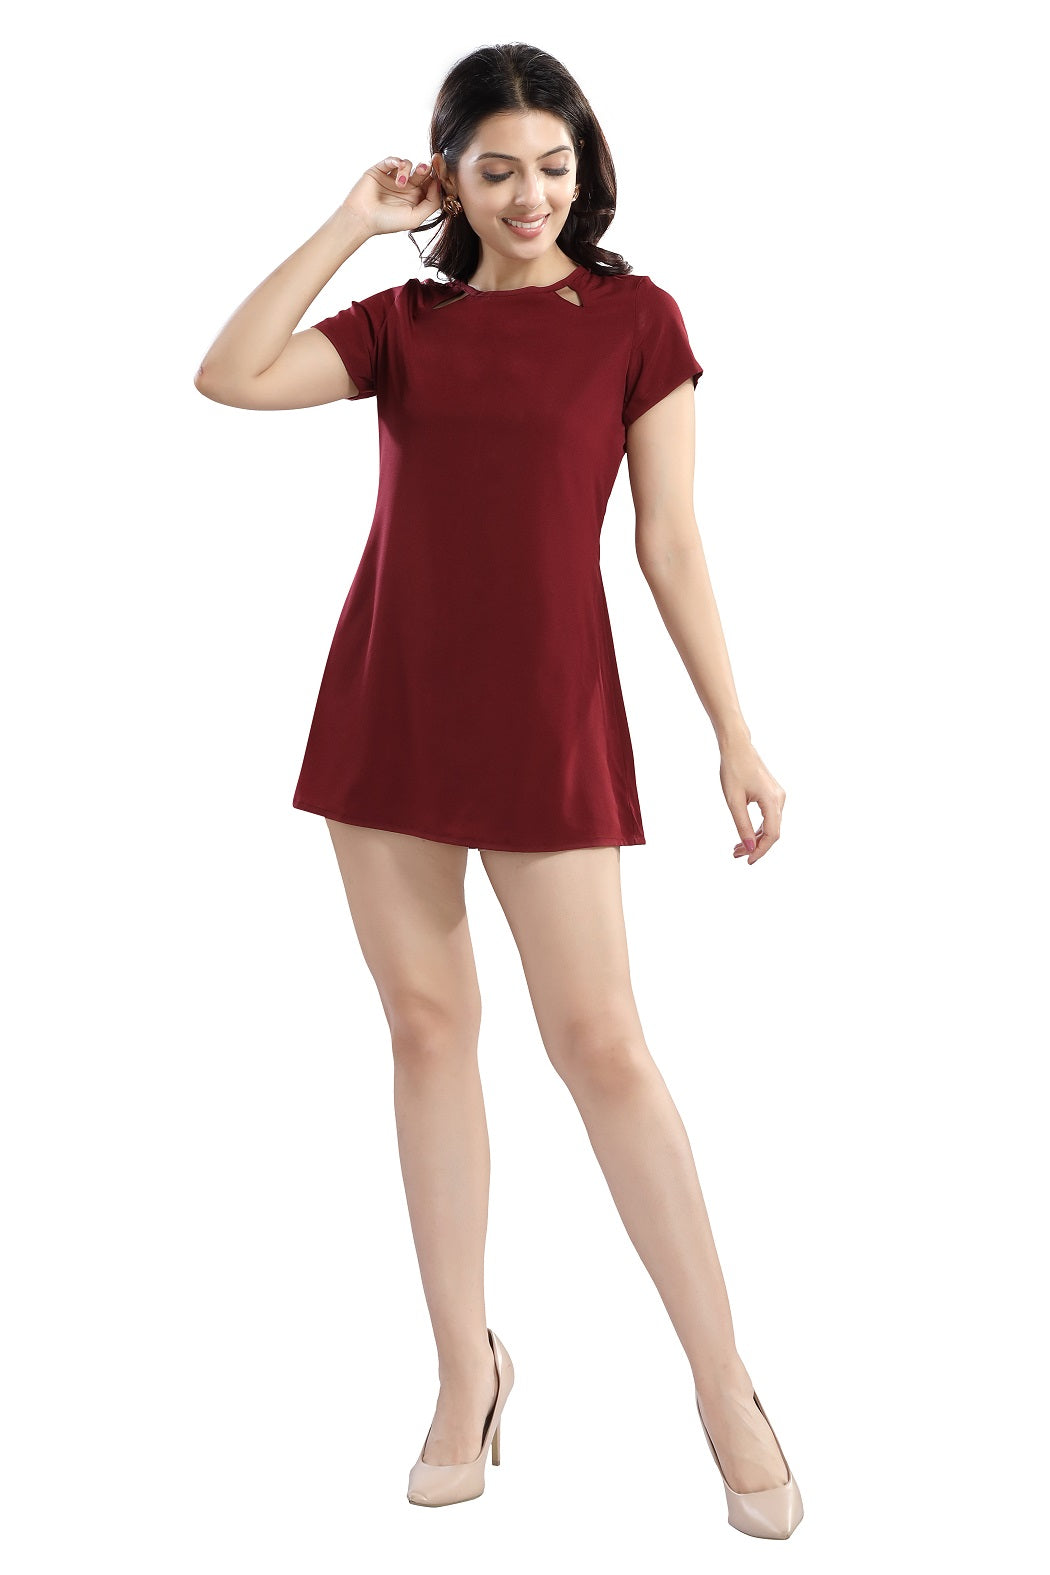 Cherrylavish  Solid Maroon Crepe Mini A-Line Dress With Cut-outs